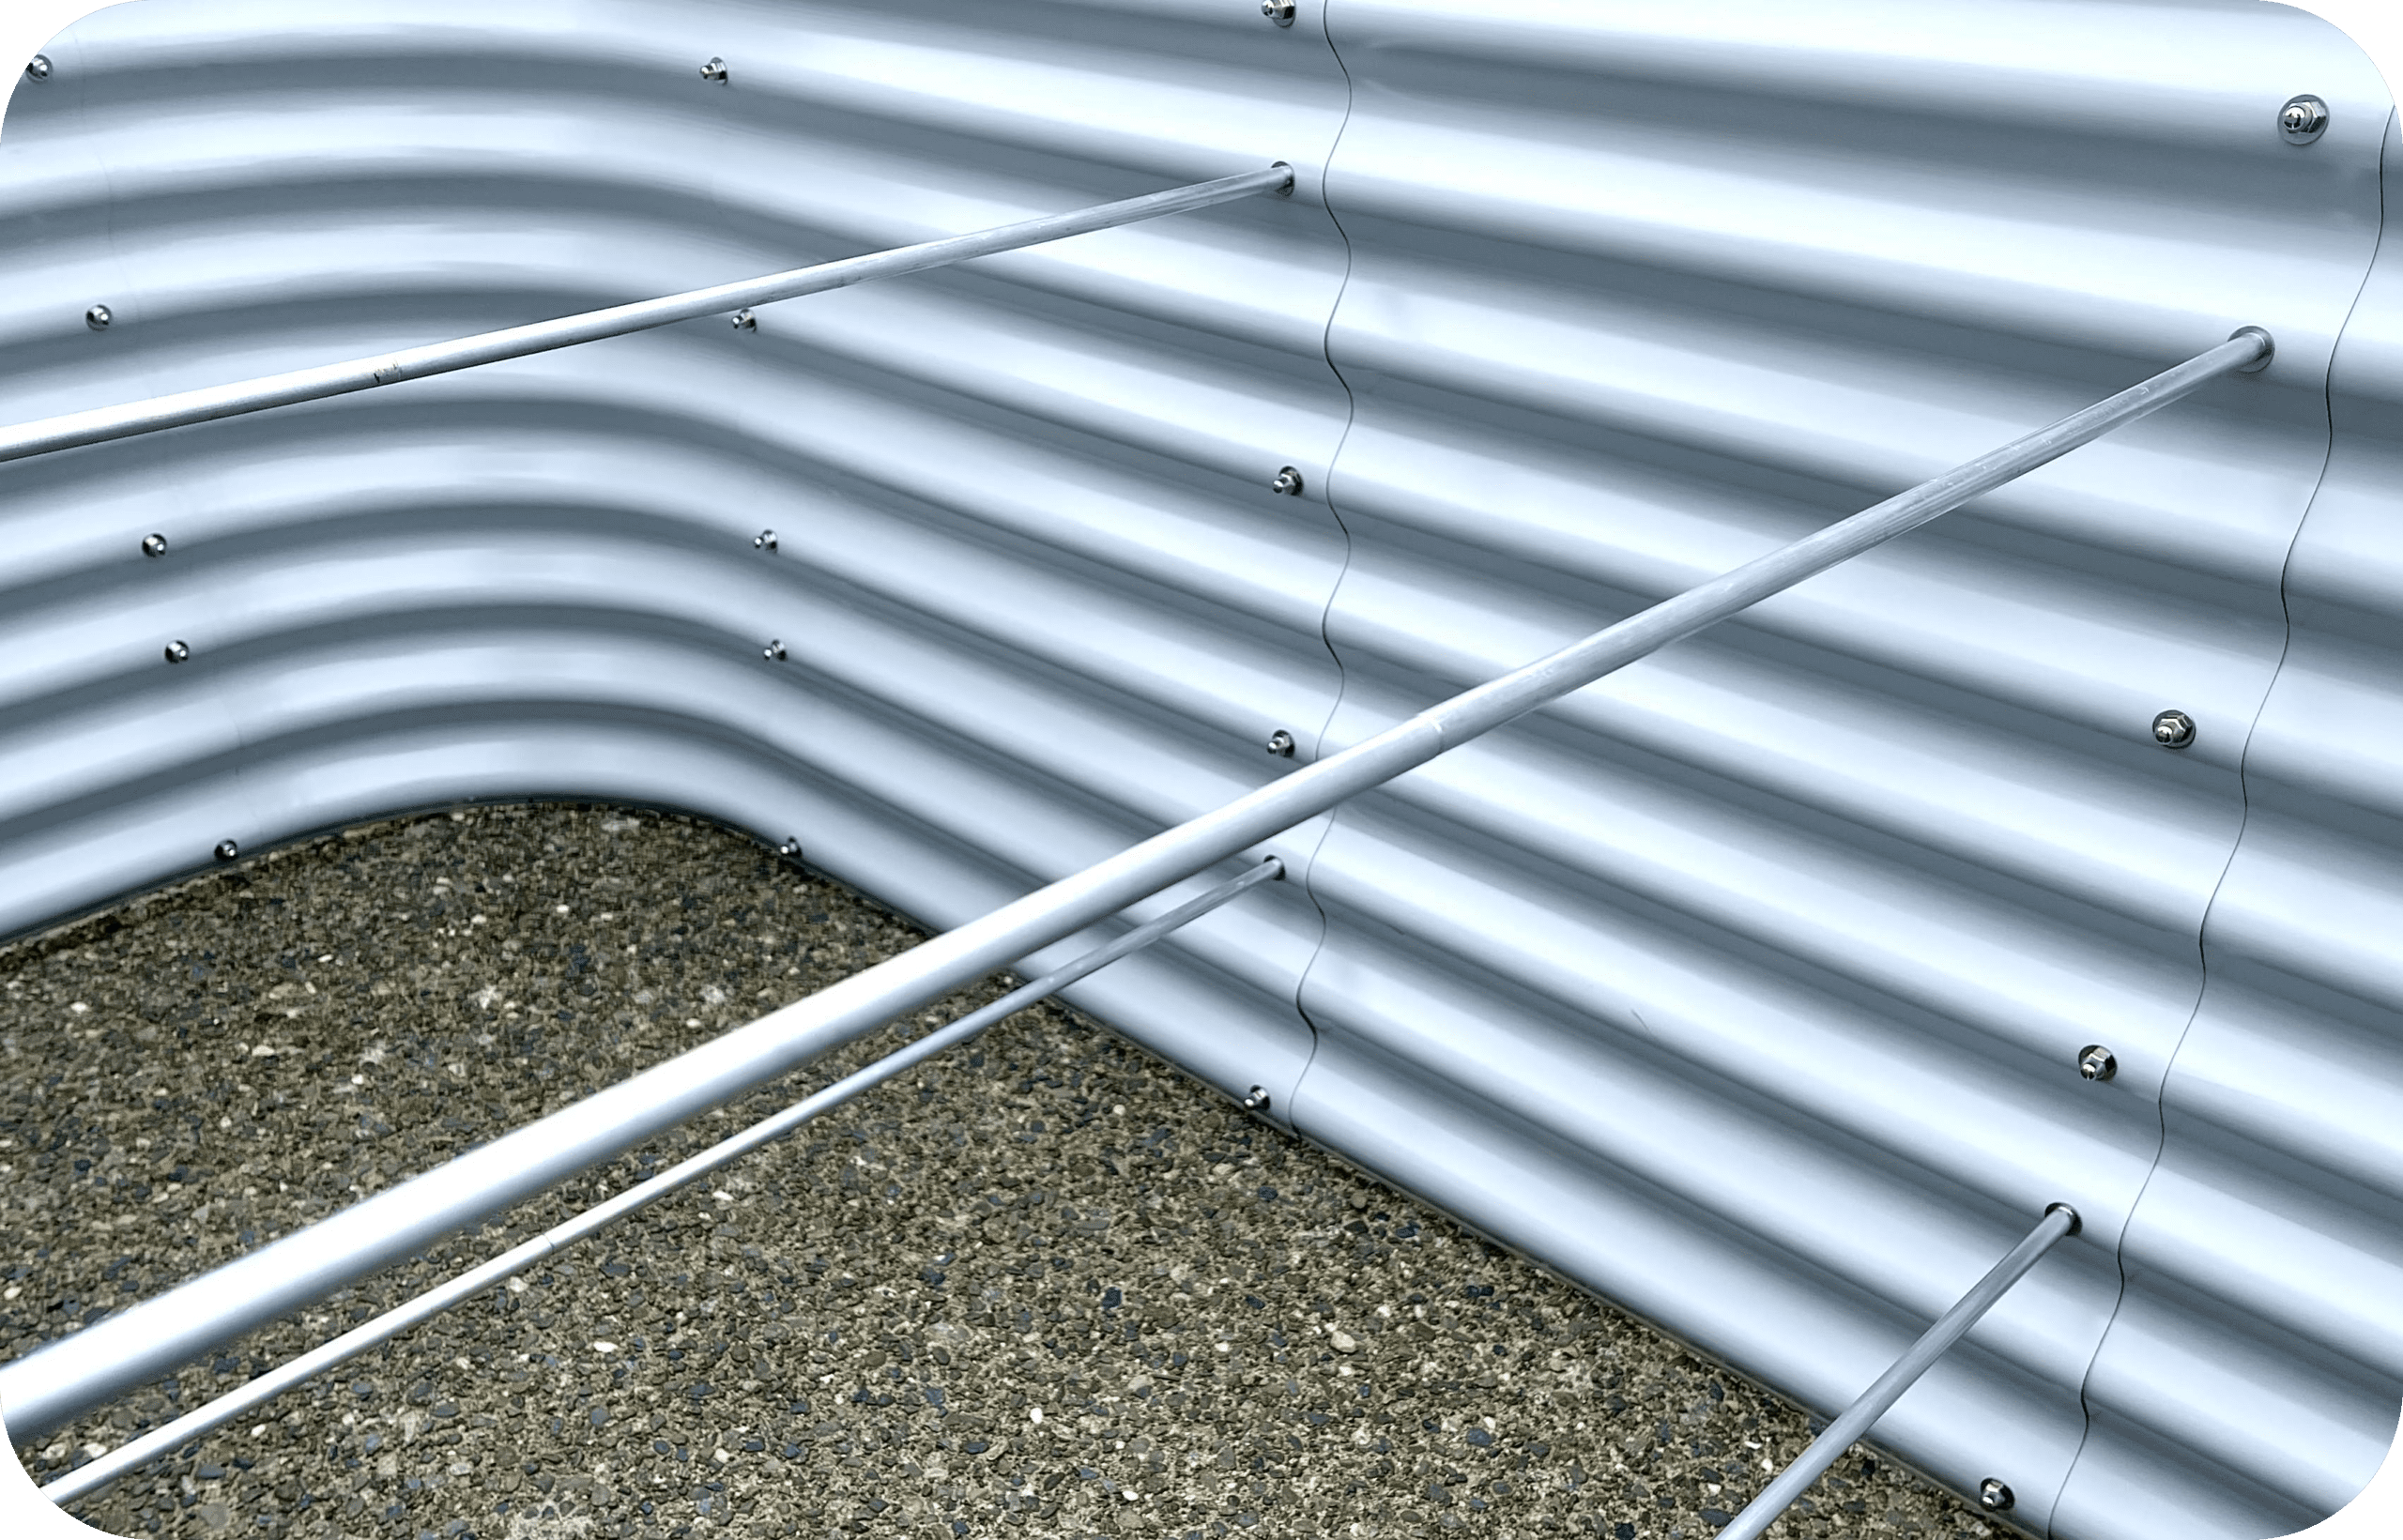 aluminum bracing rod reinforcing strong metal garden bed